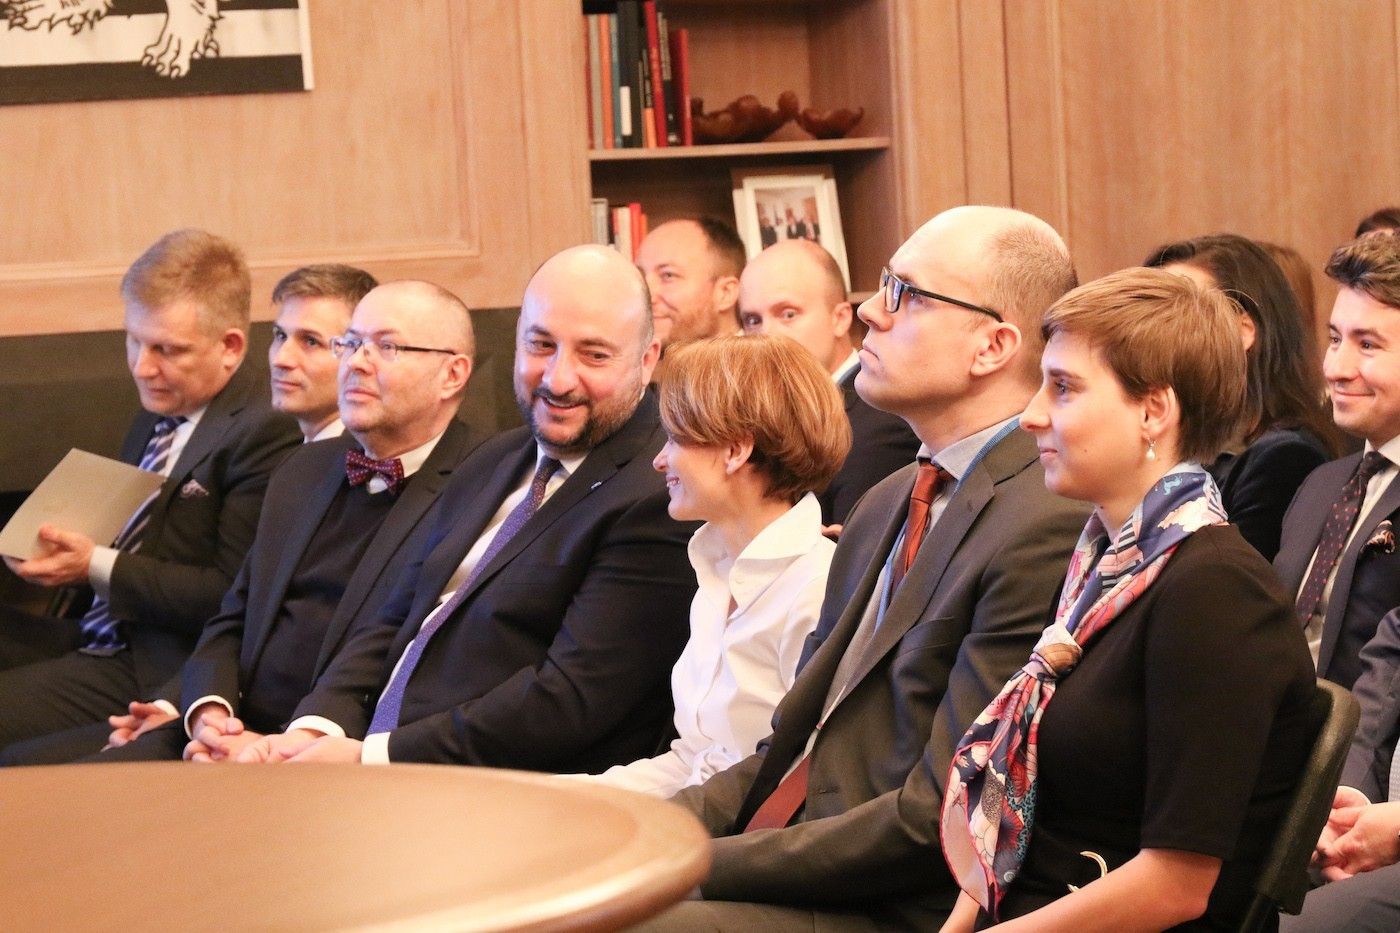 Fot. Ministerstwo Rozwoju [gov.pl]